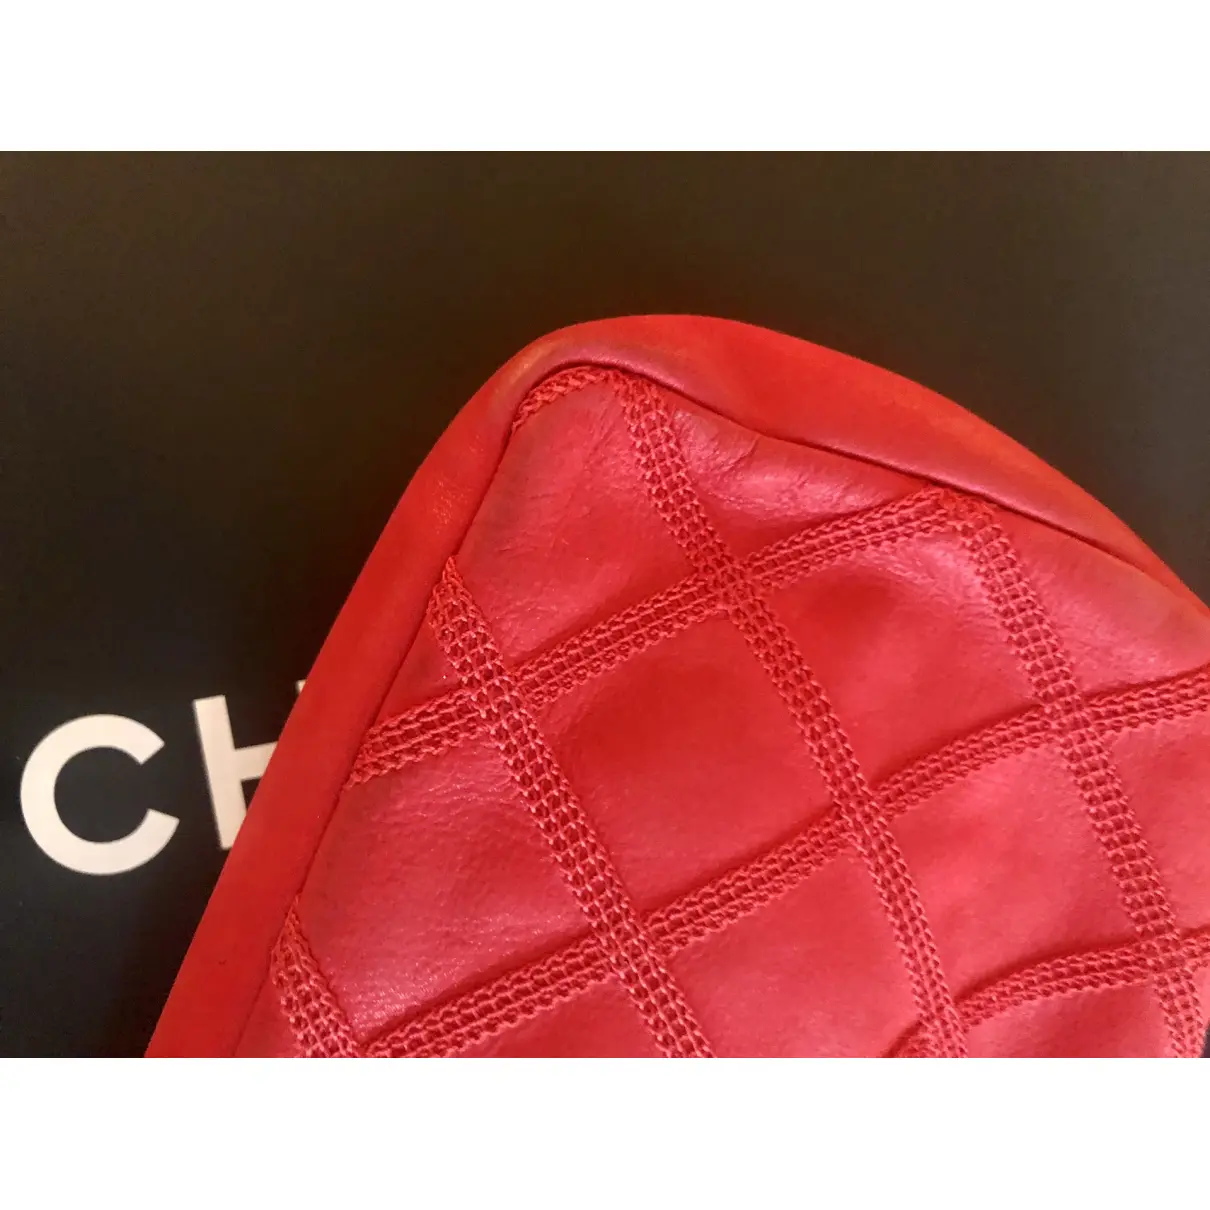 Handbag Chanel